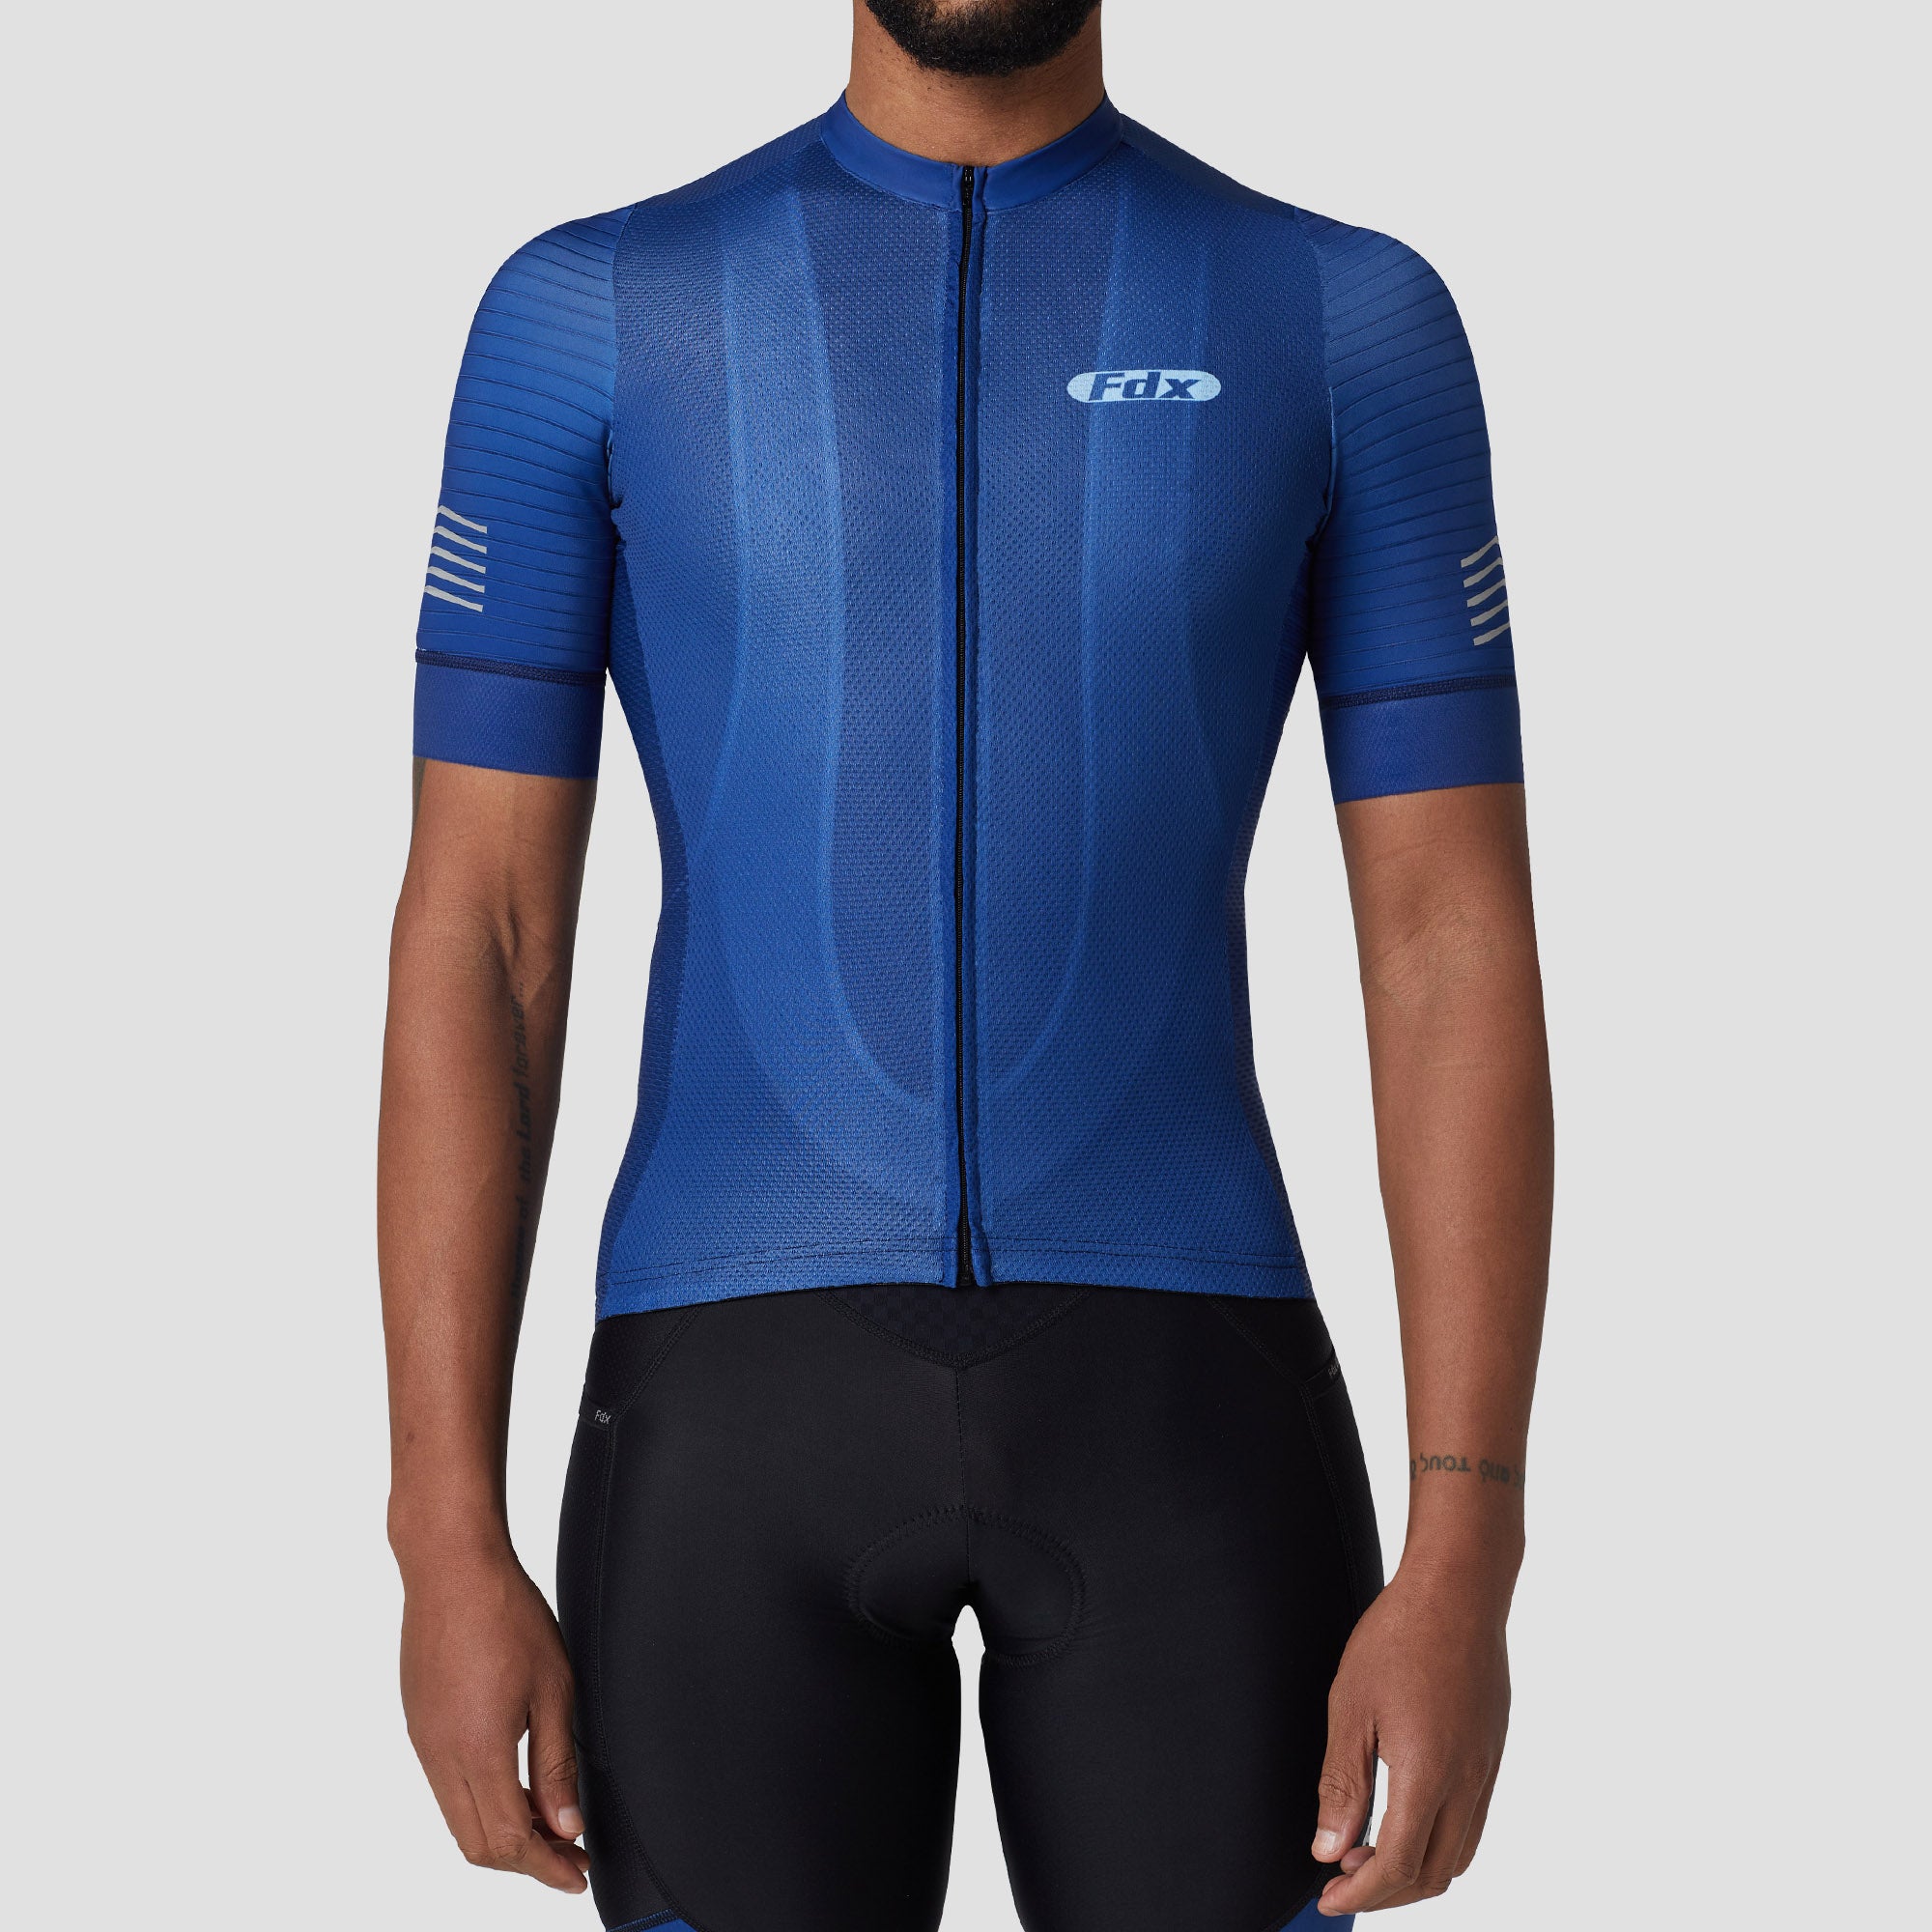 Fdx Mens Orange Blue Sleeve Cycling Jersey for Summer Best Road Bike Wear Top Light Weight, Full Zipper, Pockets & Hi-viz Reflectors - Essential